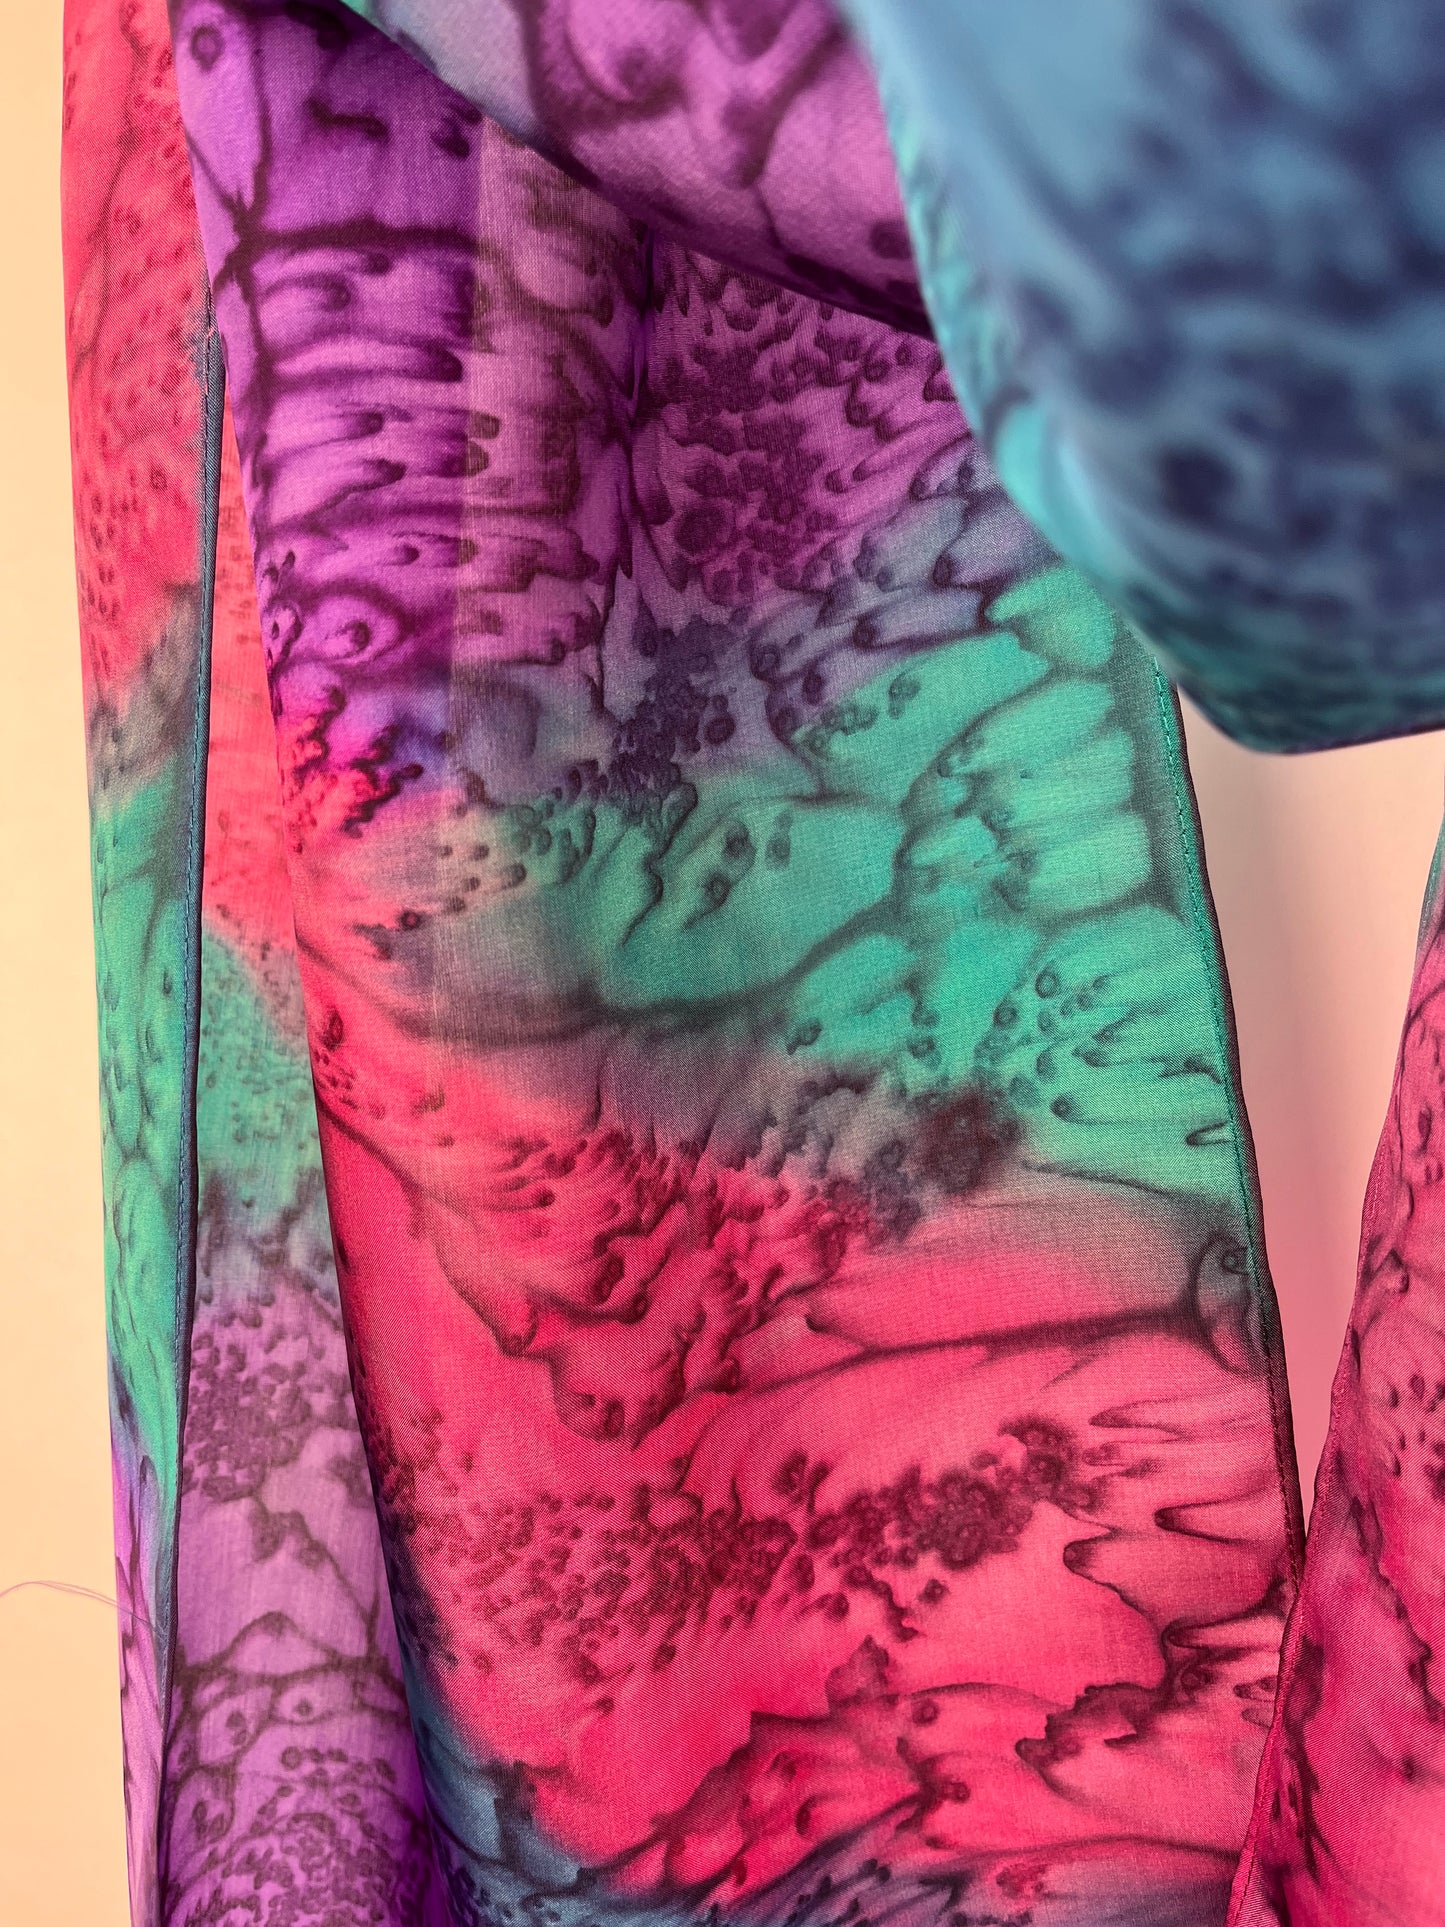 "Mermaid - Jewel Toned” - Hand-dyed Silk Scarf - $115